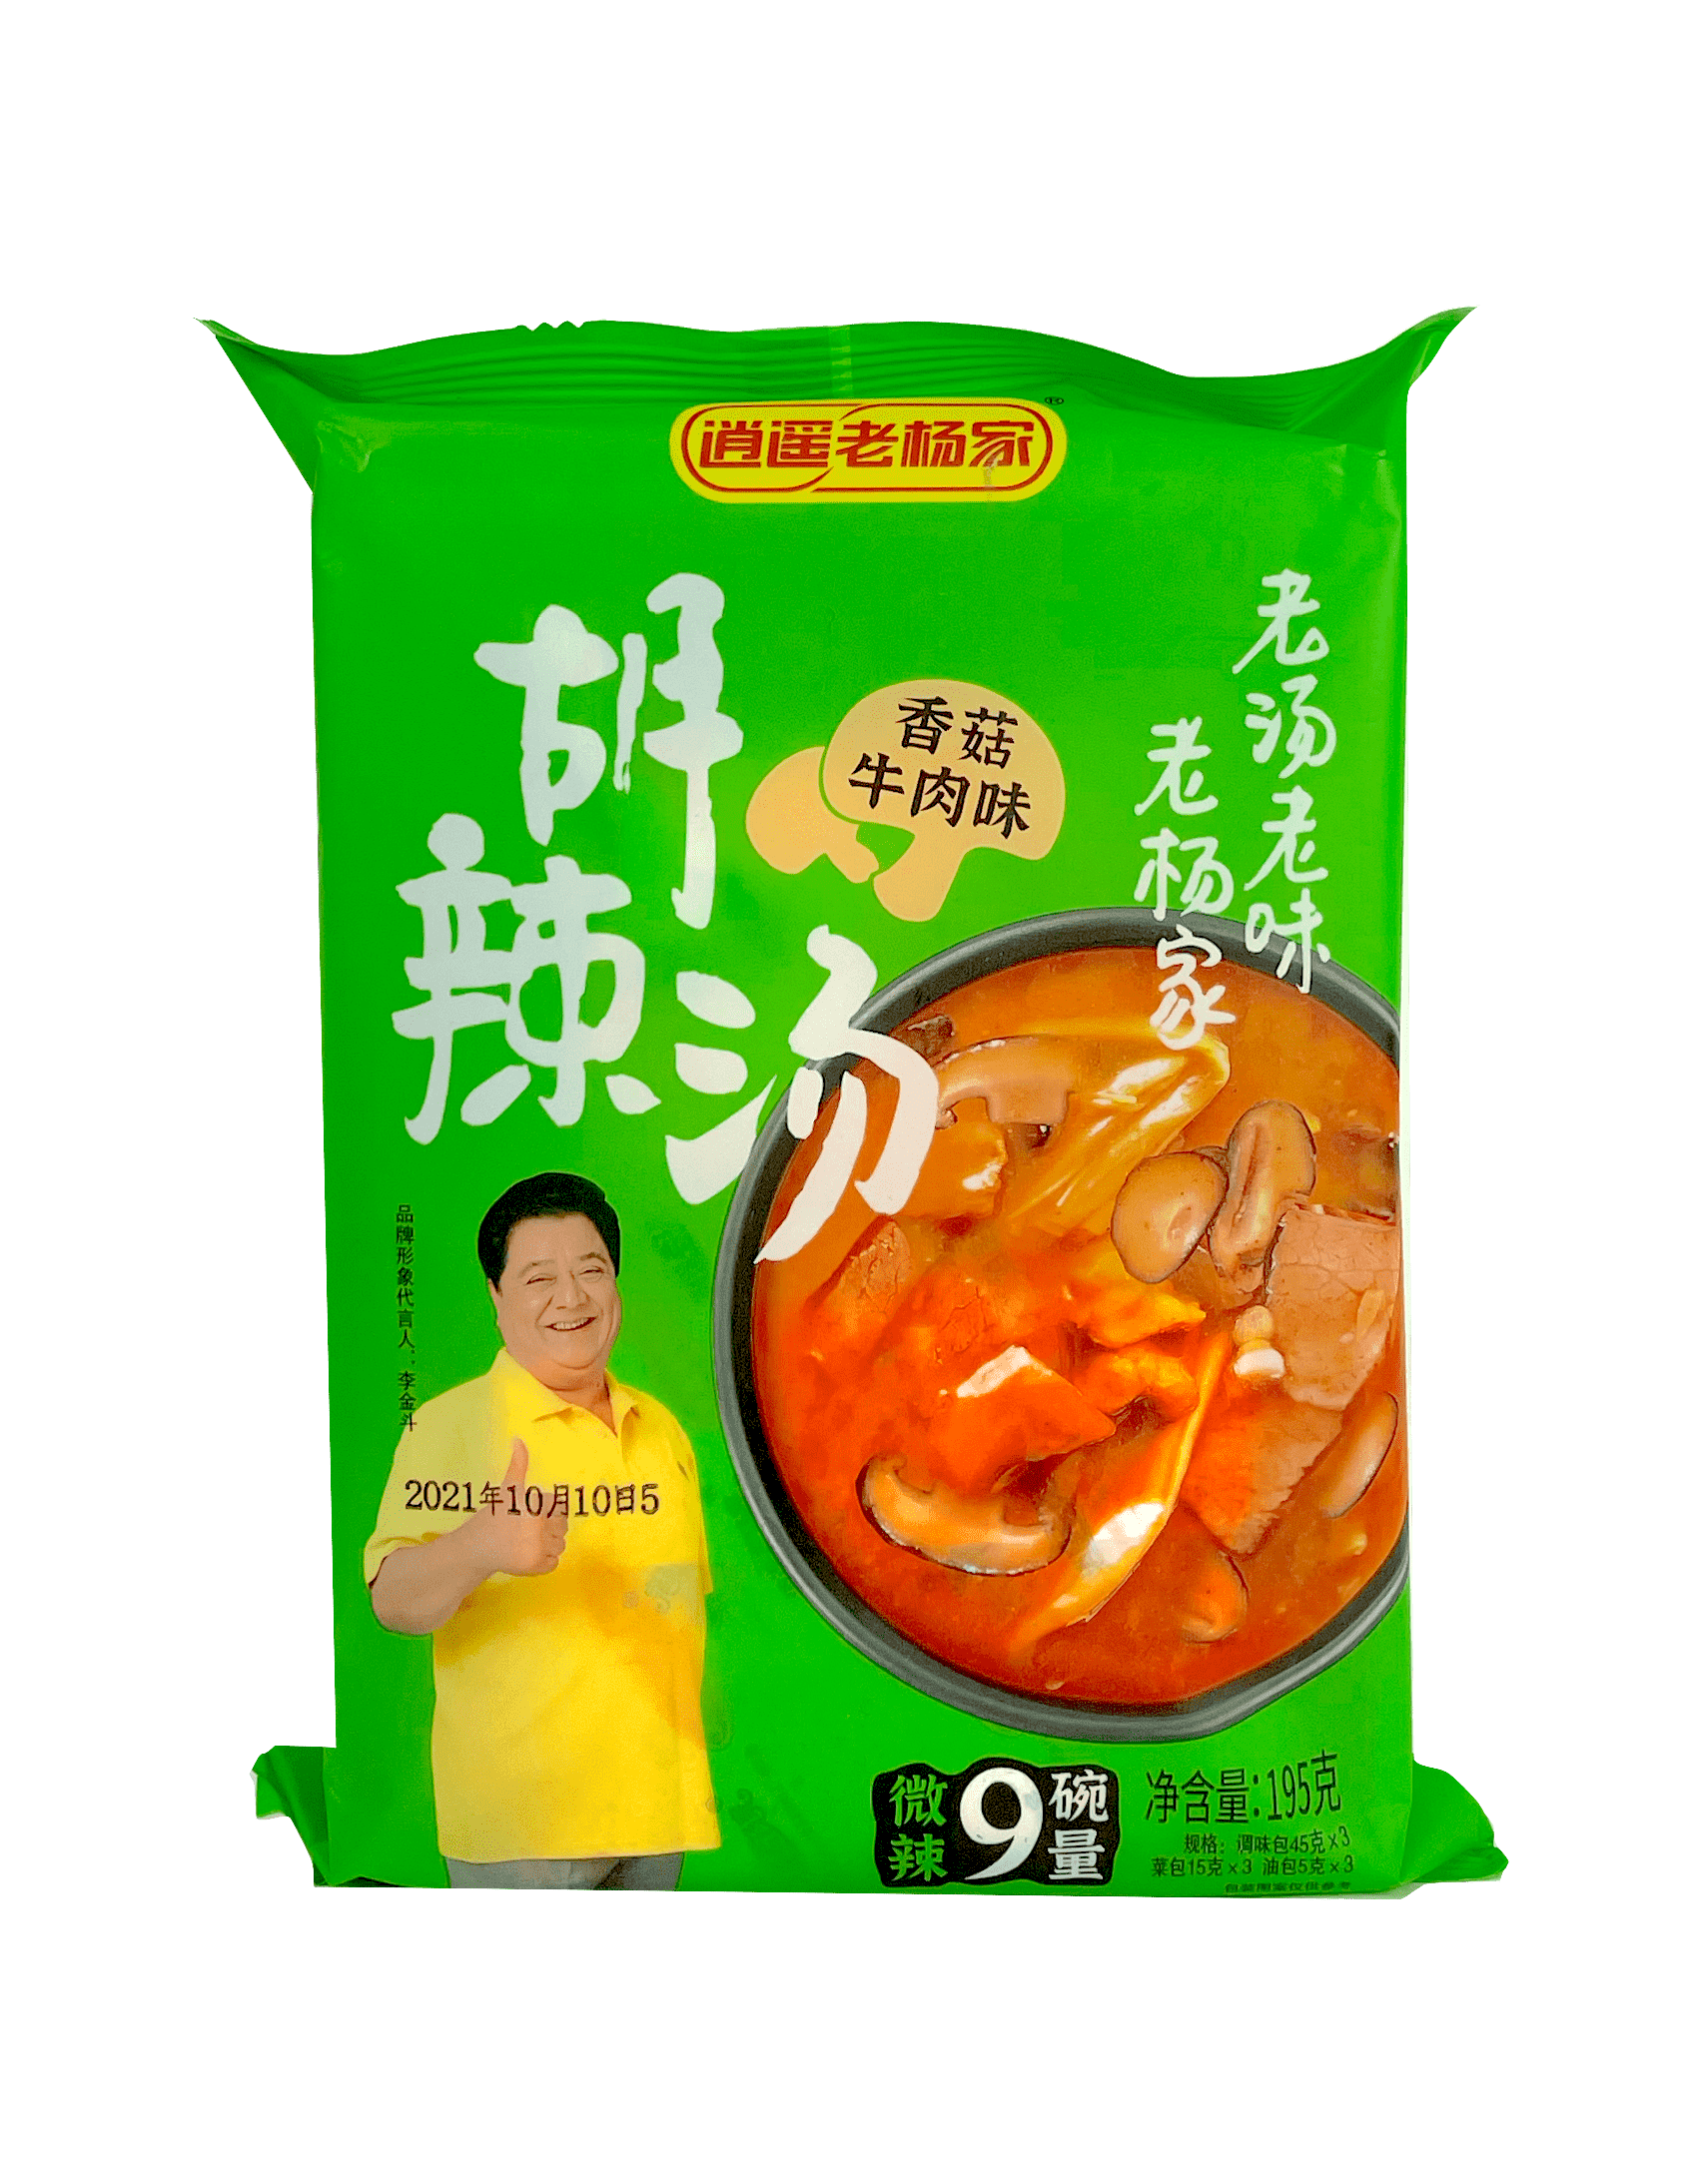 Best Before: 2022.10.09 Instant Soup Spicy Mushroom/Beef Taste 195g Hu La Tang Lao Yang Jia China